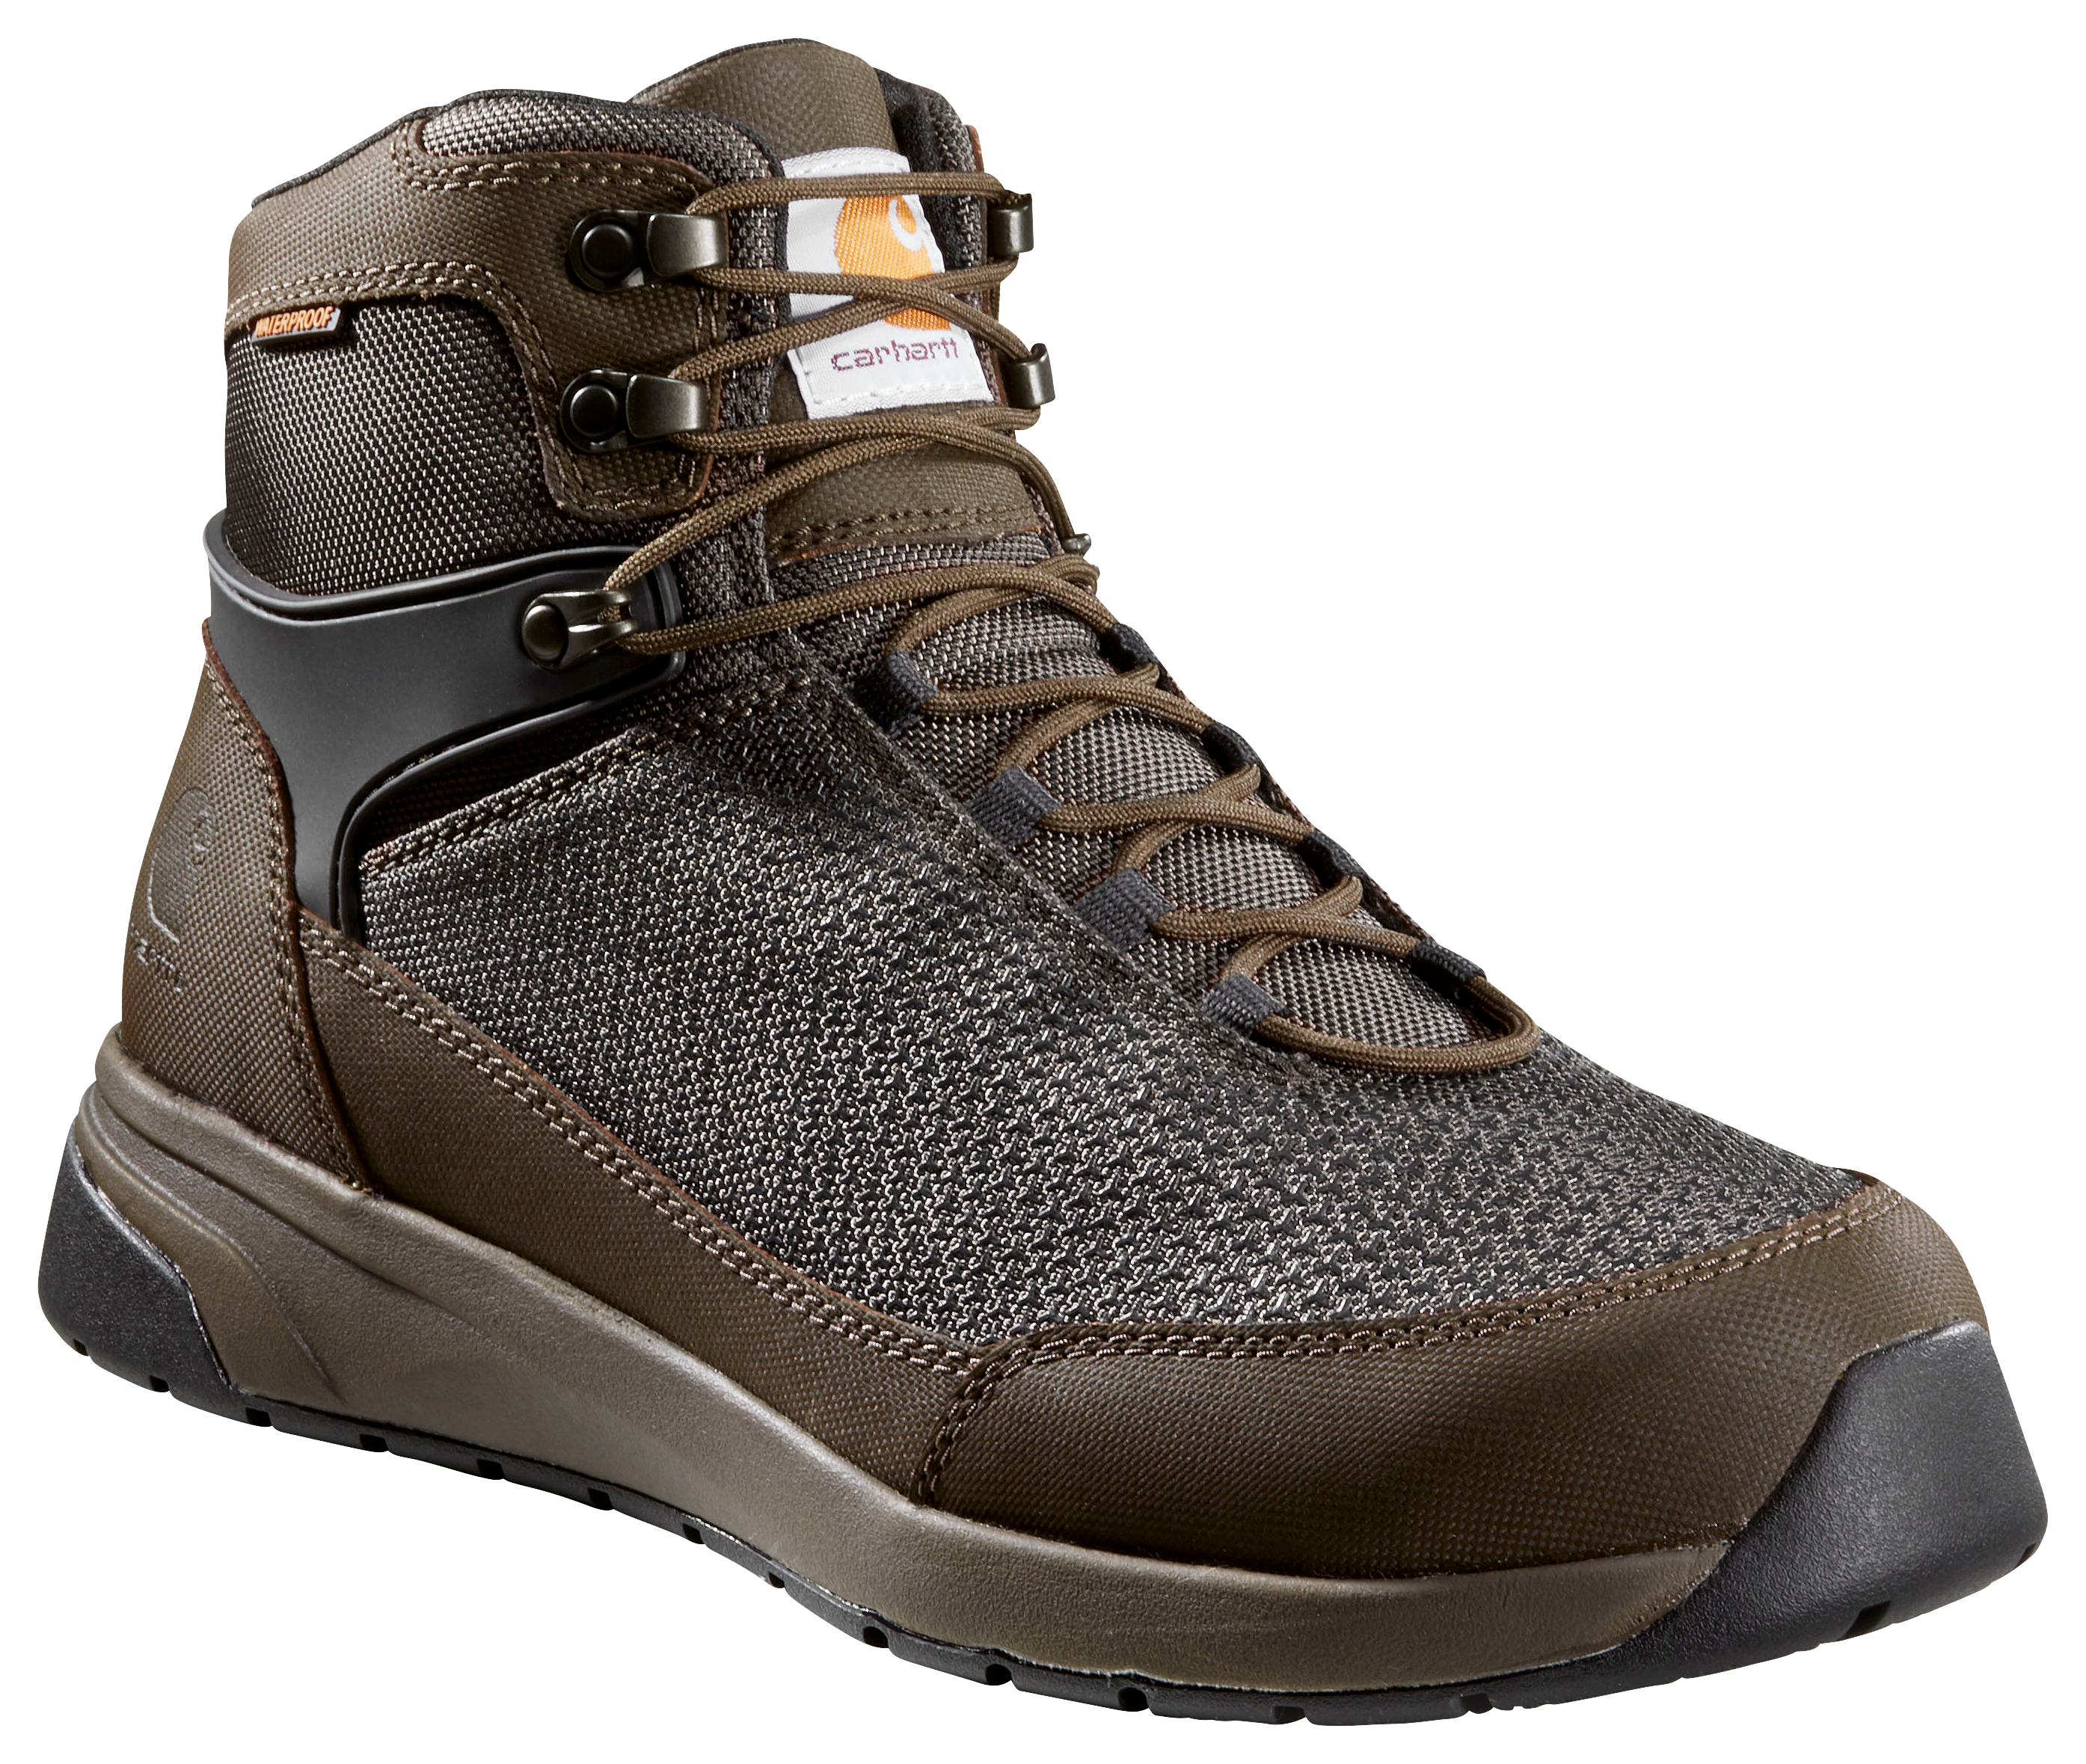 Carhartt Force 6"" Nano Composite-Toe Work Boots for Men - Espresso - 8W